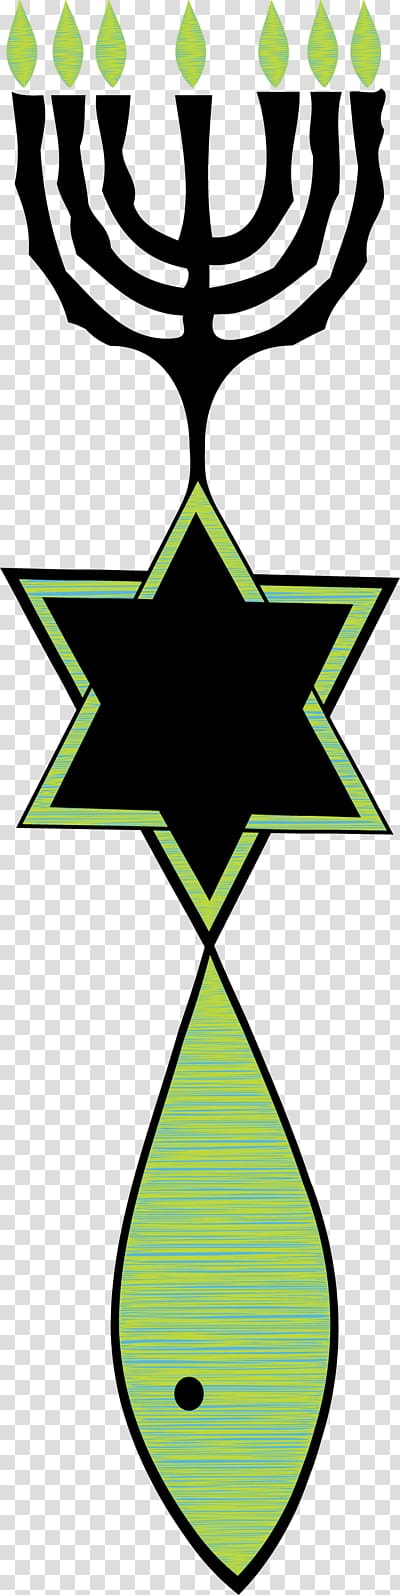 Christianity and Judaism Messianic Judaism Jewish symbolism , Of Judaism Symbols transparent background PNG clipart